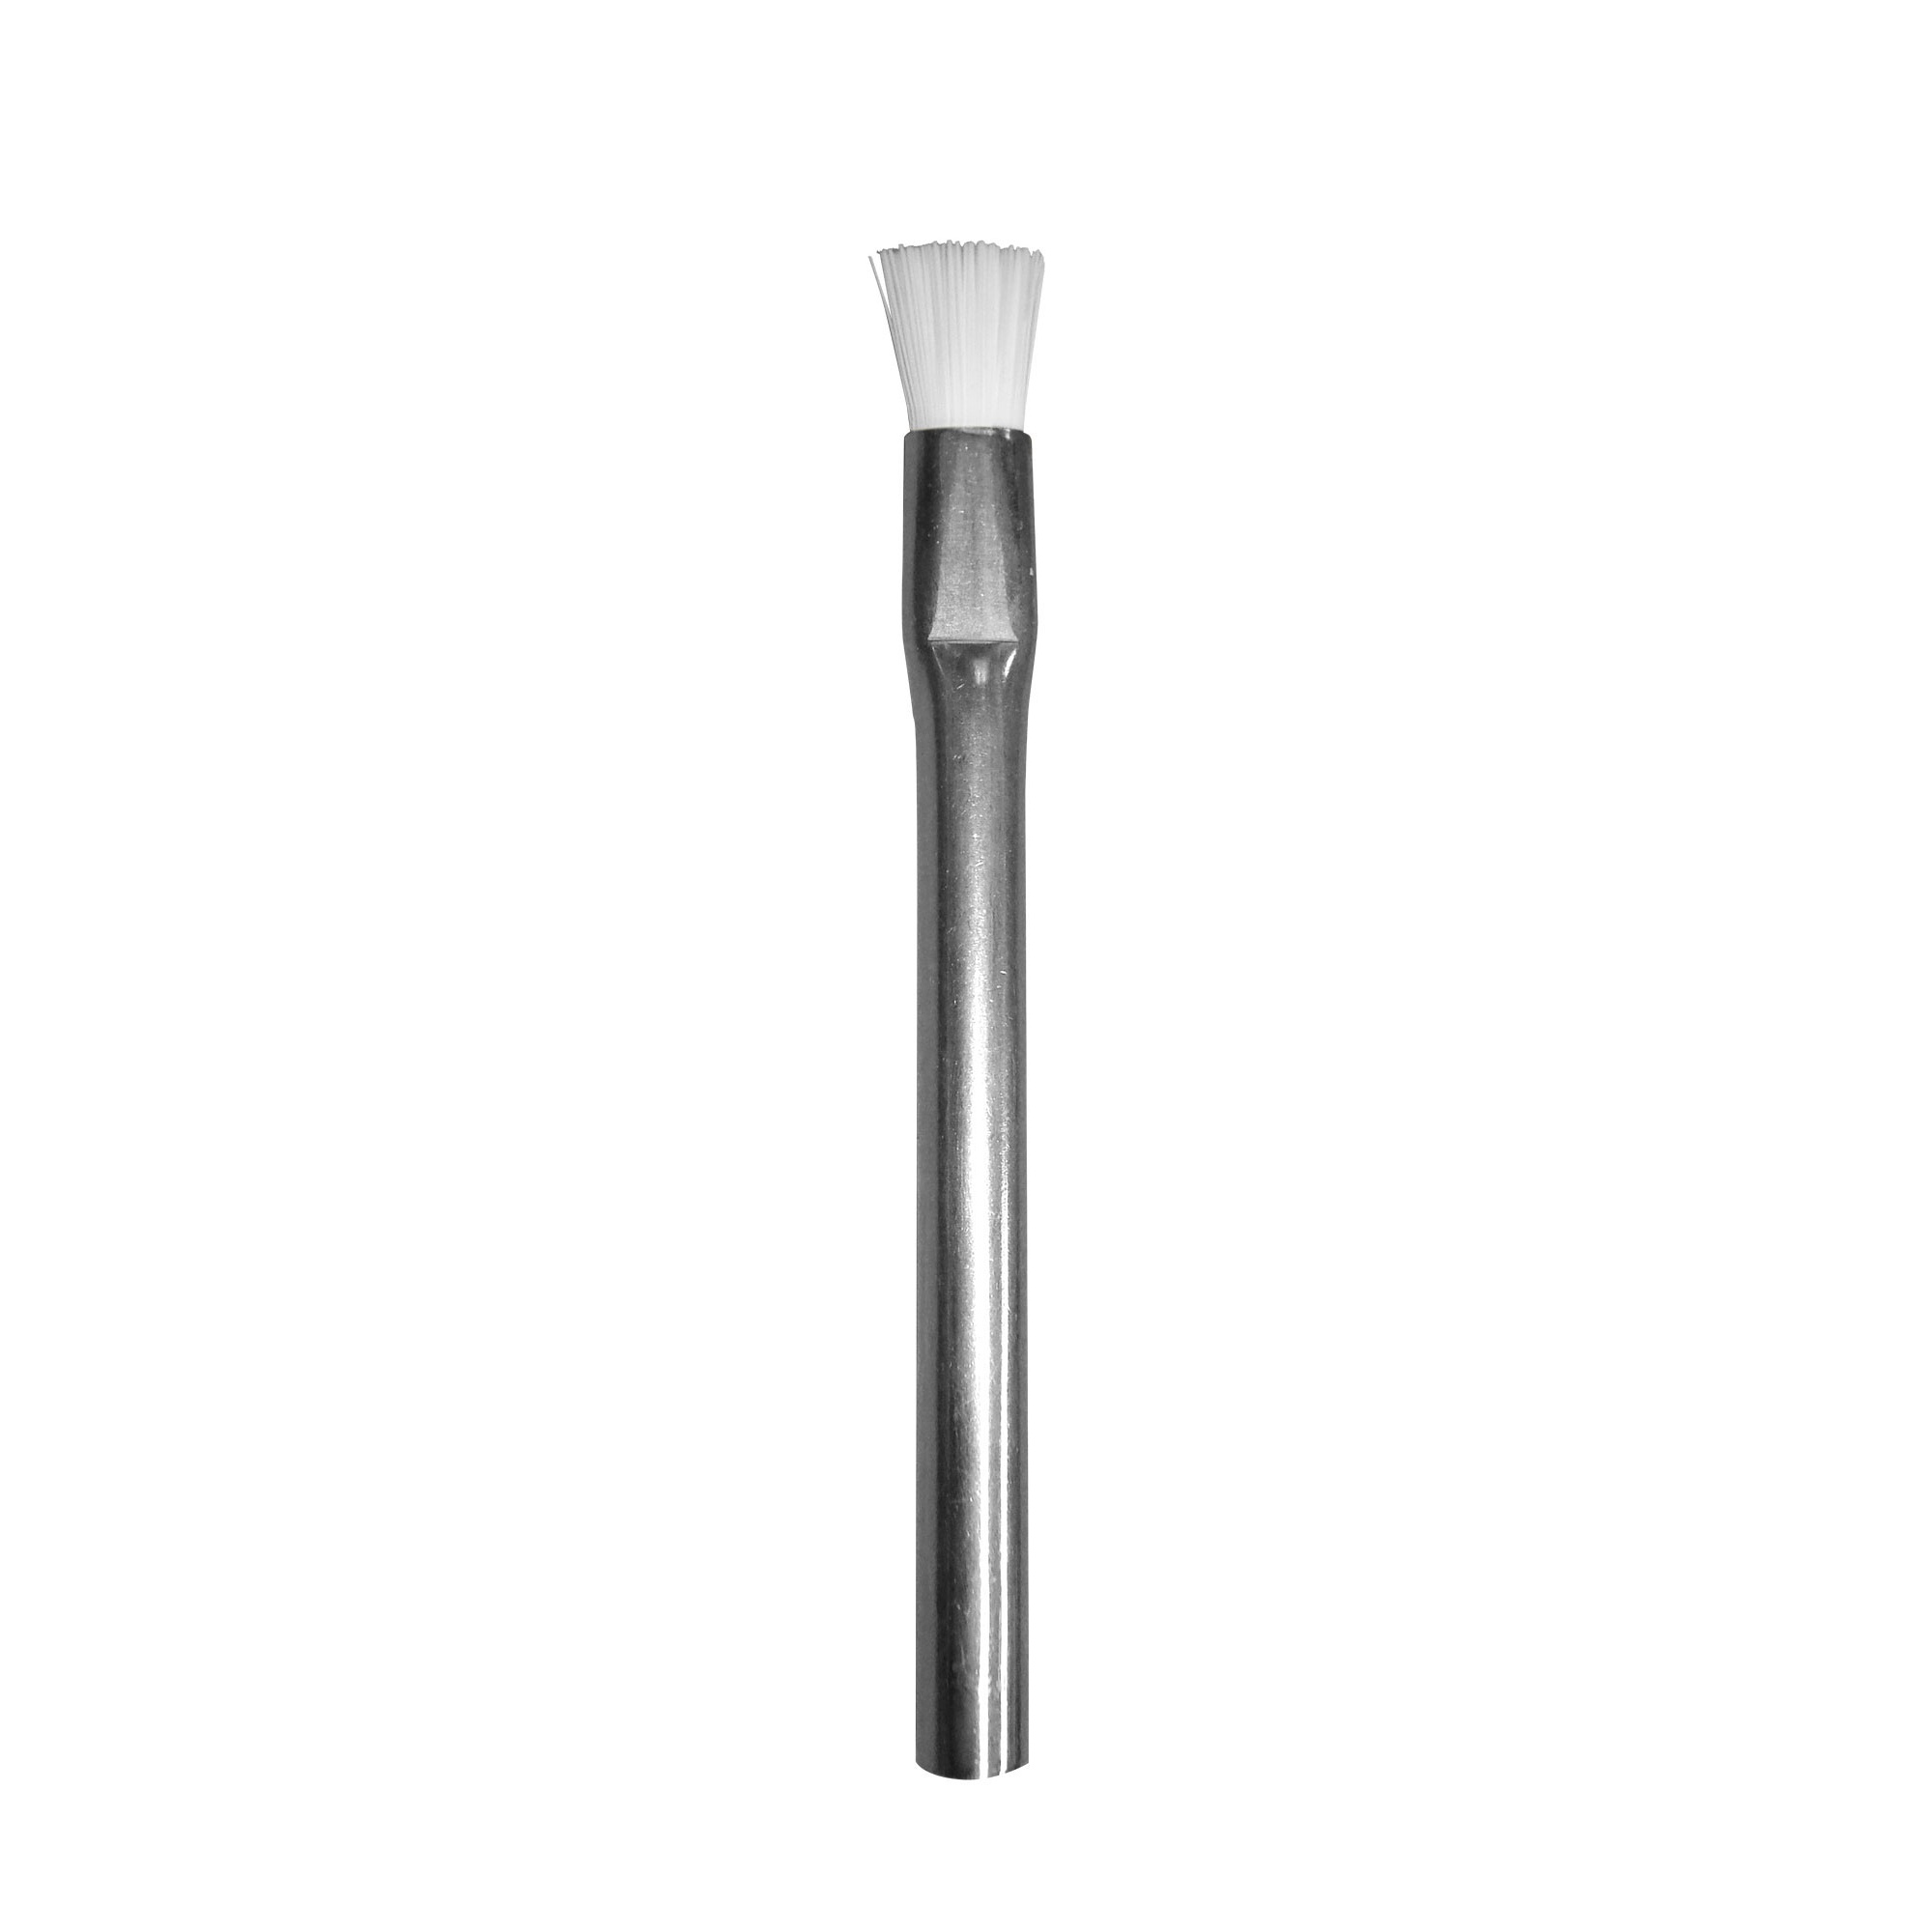 Applicator Brush — 0.008" Polypropylene Bristle / 5/16" Diameter Stainless Steel Tube Handle 1